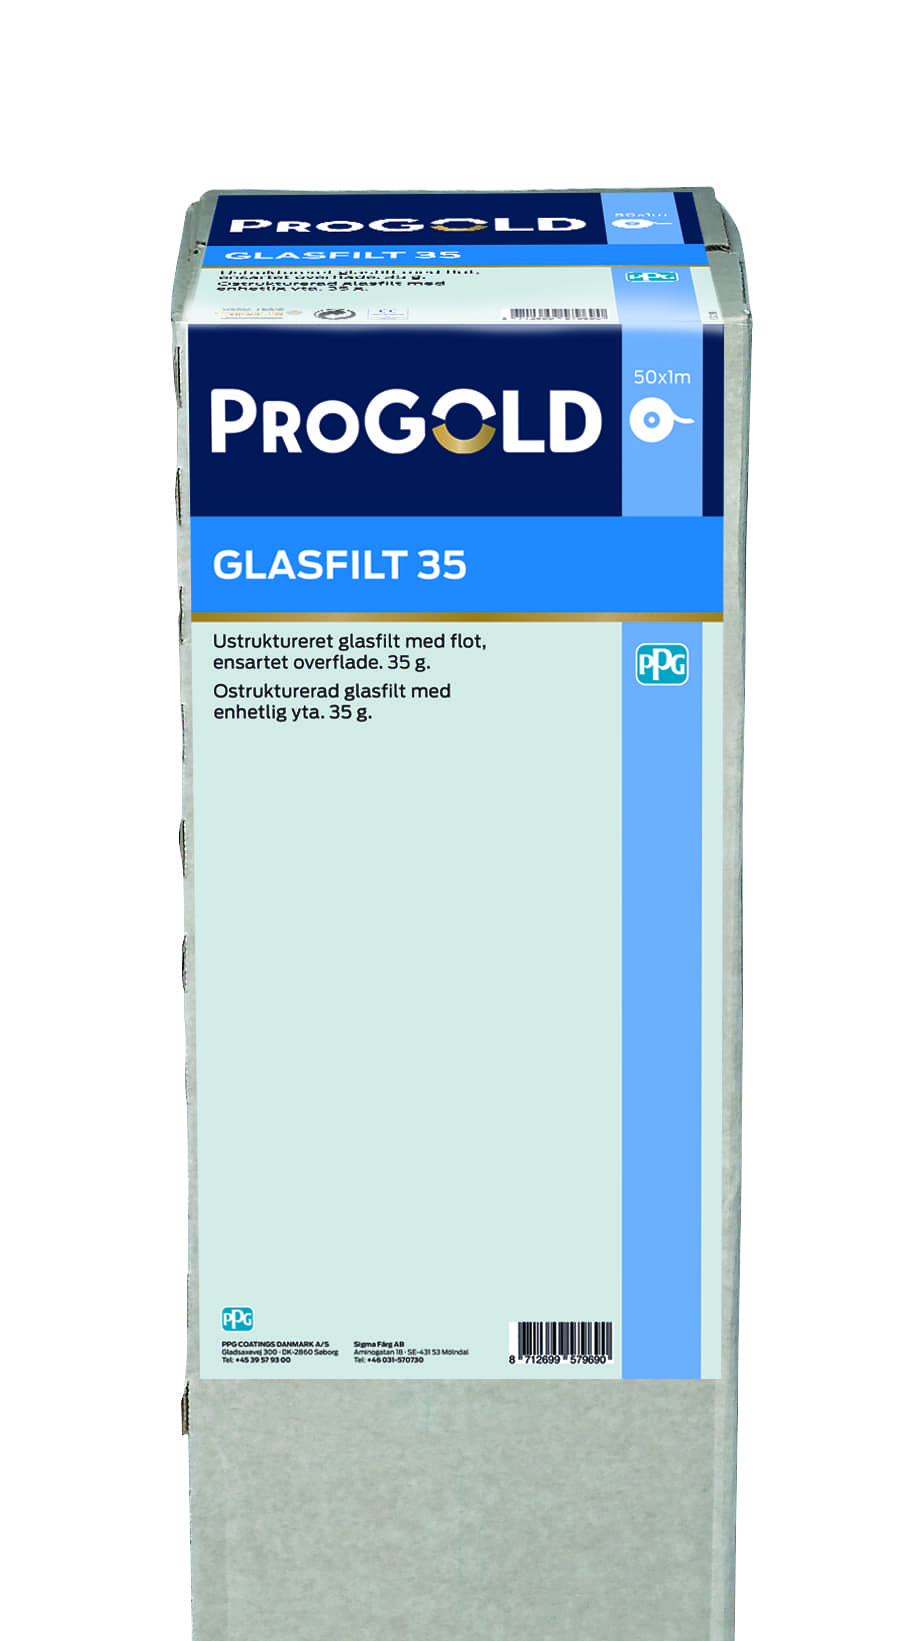 Glasfilt 35